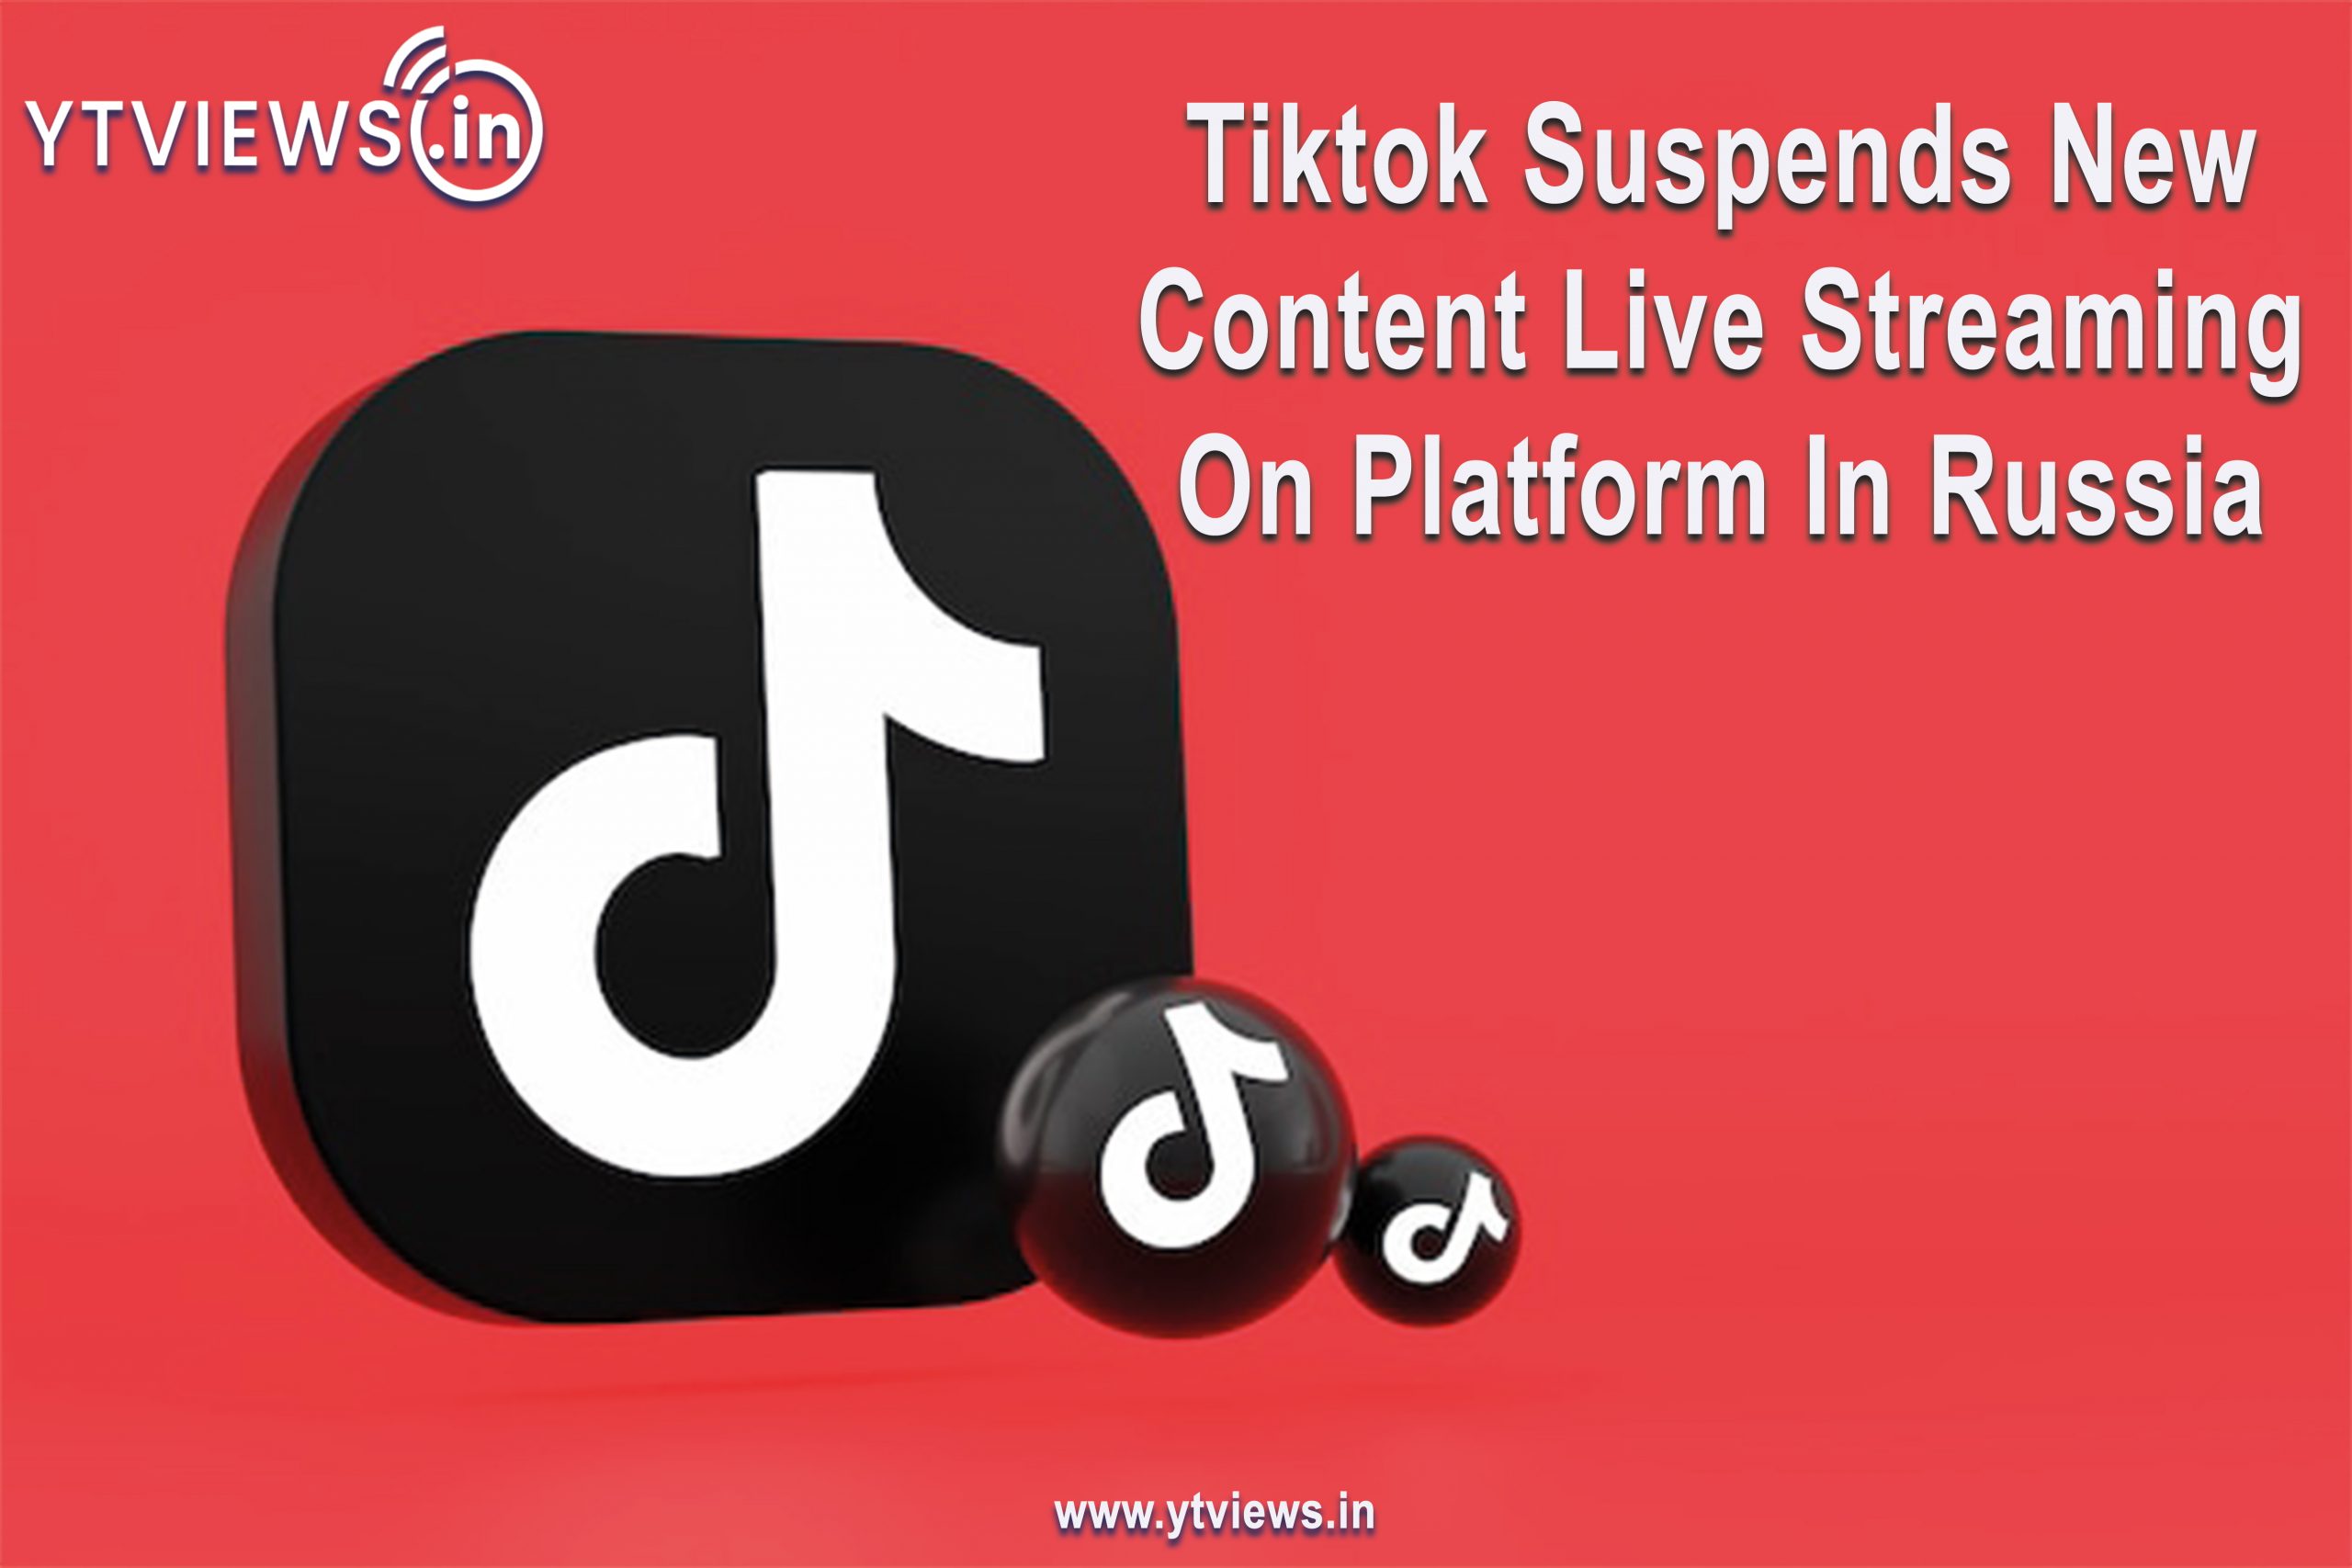 TikTok suspends new content, livestreaming on platform in Russia